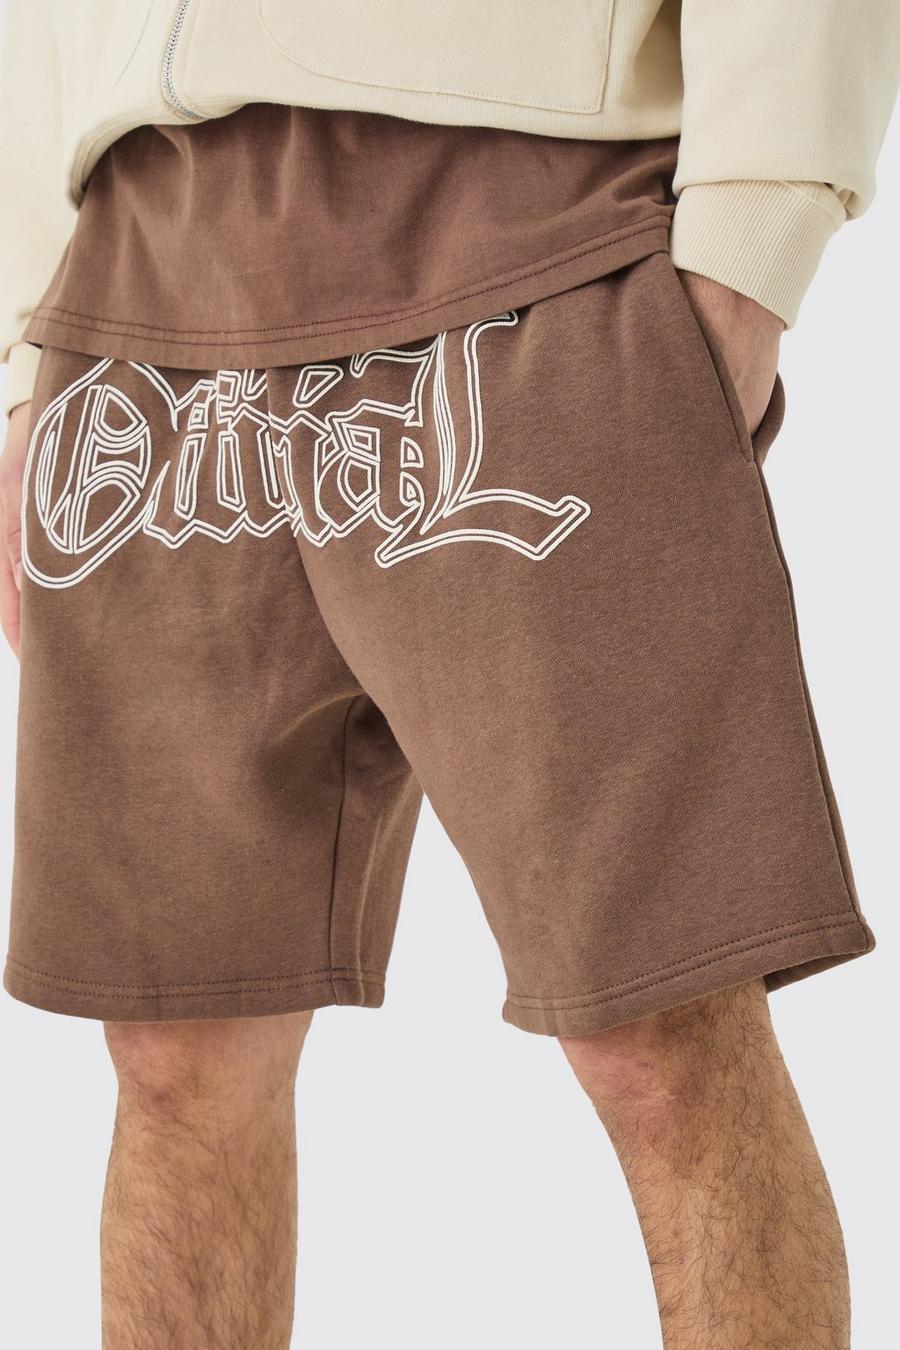 Lockere Shorts mit Official-Print, Chocolate